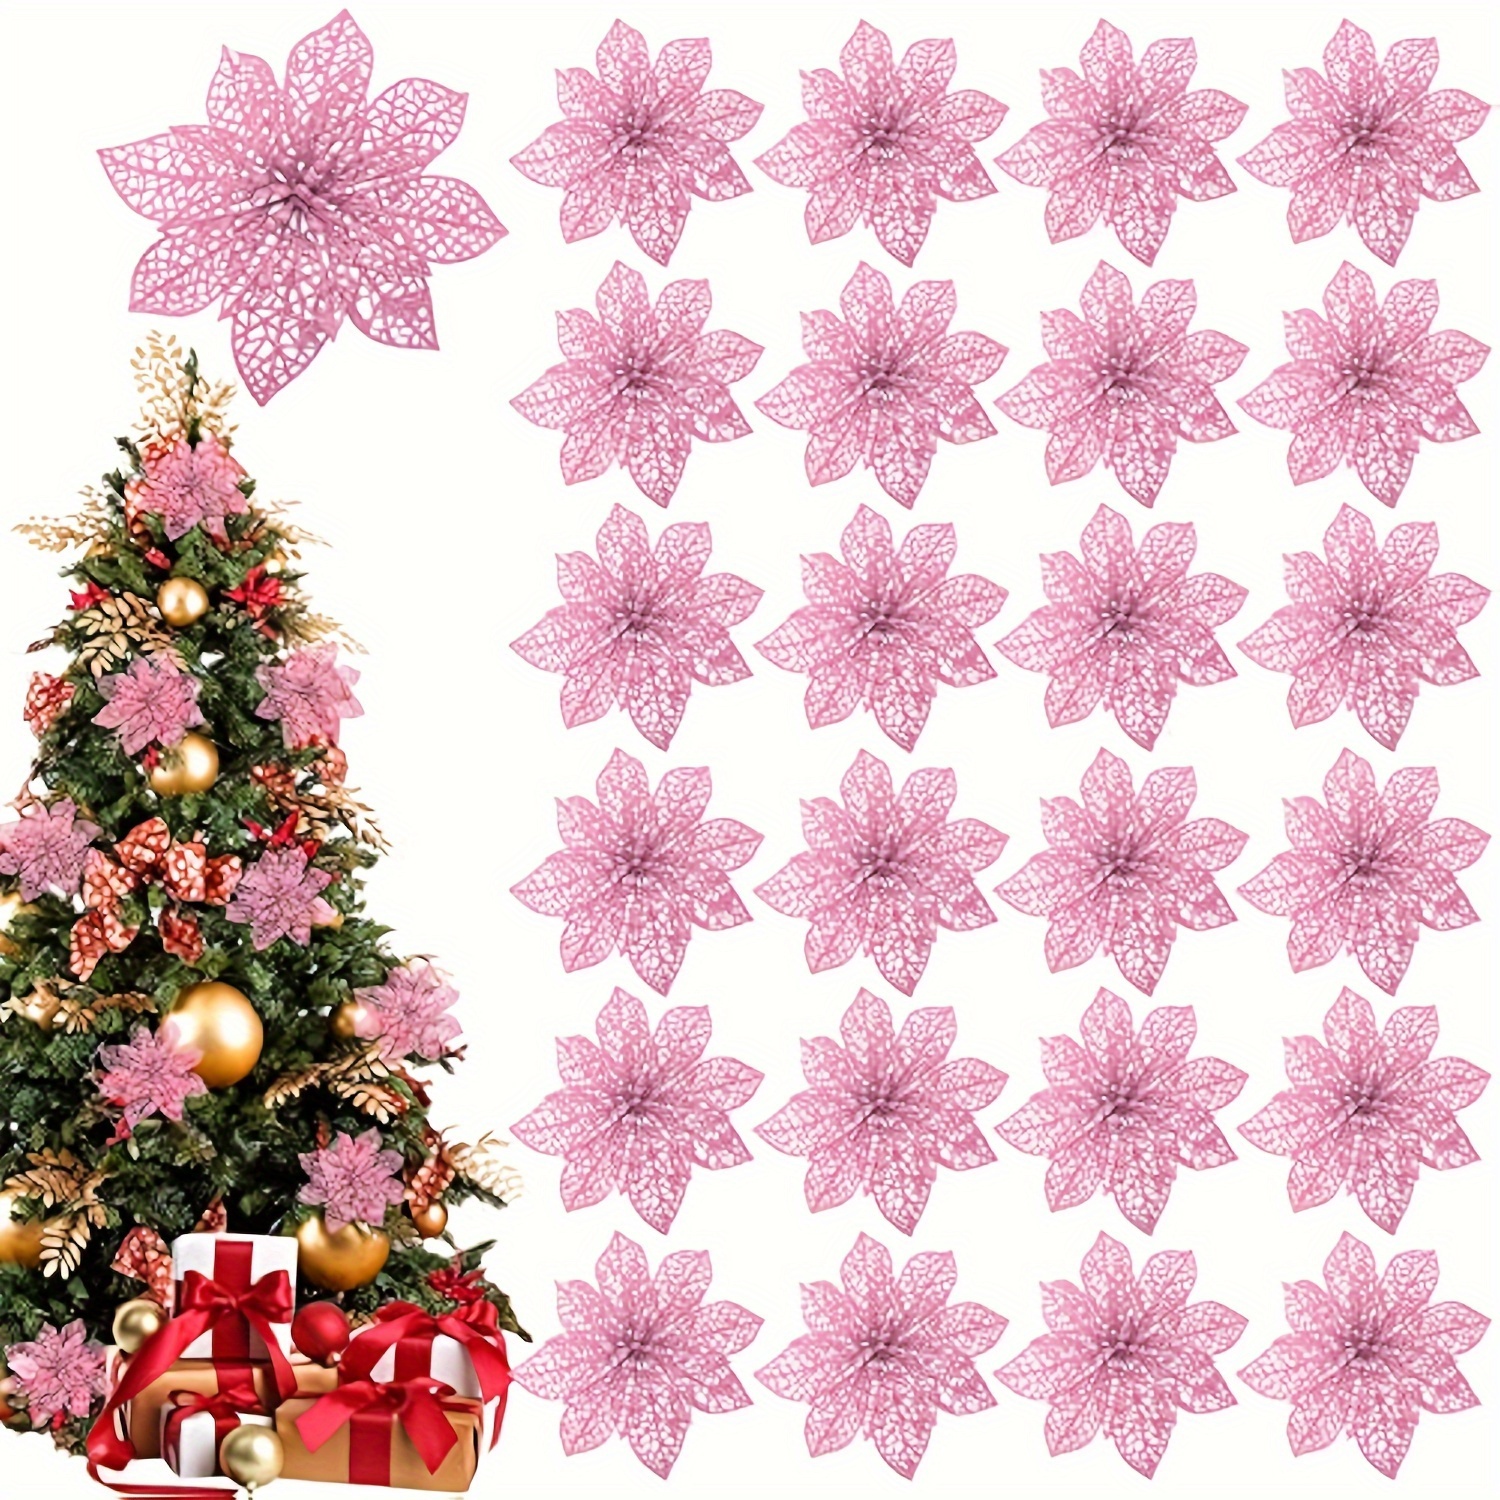 

12pcs 5.6" Diameter Glitter Christmas Flowers Poinsettia Artificial Flower Christmas Wreath Christmas Tree Flowers Ornaments, With 12pcs Green Flower Stems